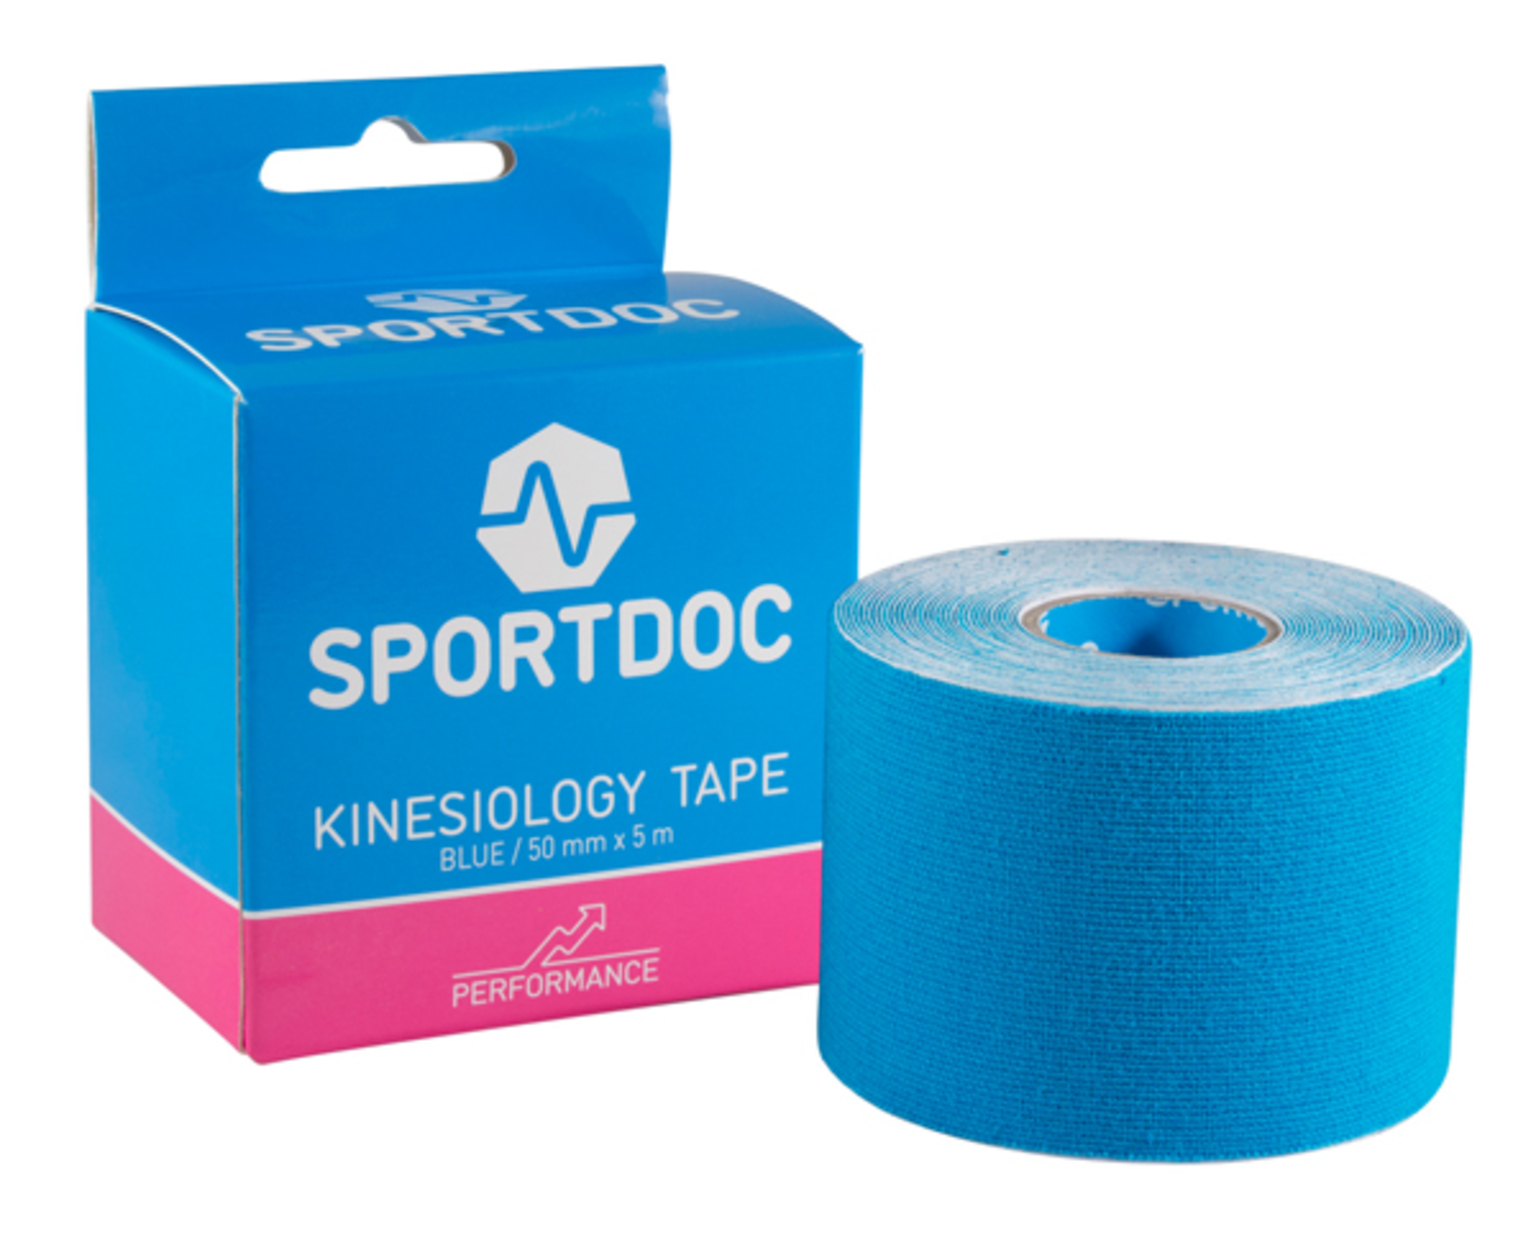 SportDoc Kinesiology Tape 50mm x 5m